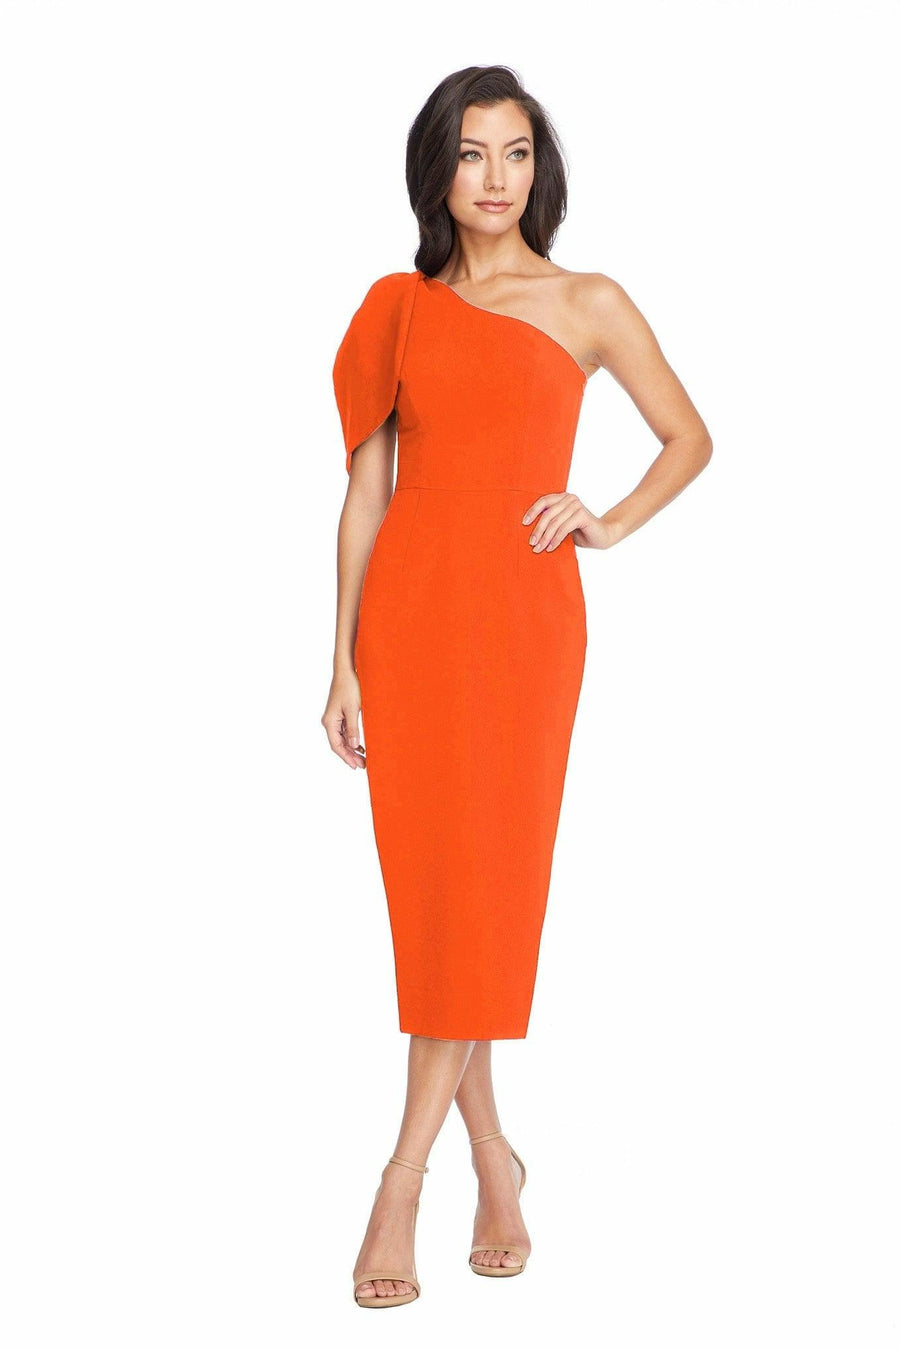 Tiffany One-Shoulder Asymmetrical Crepe Midi Dress - Dress the Population